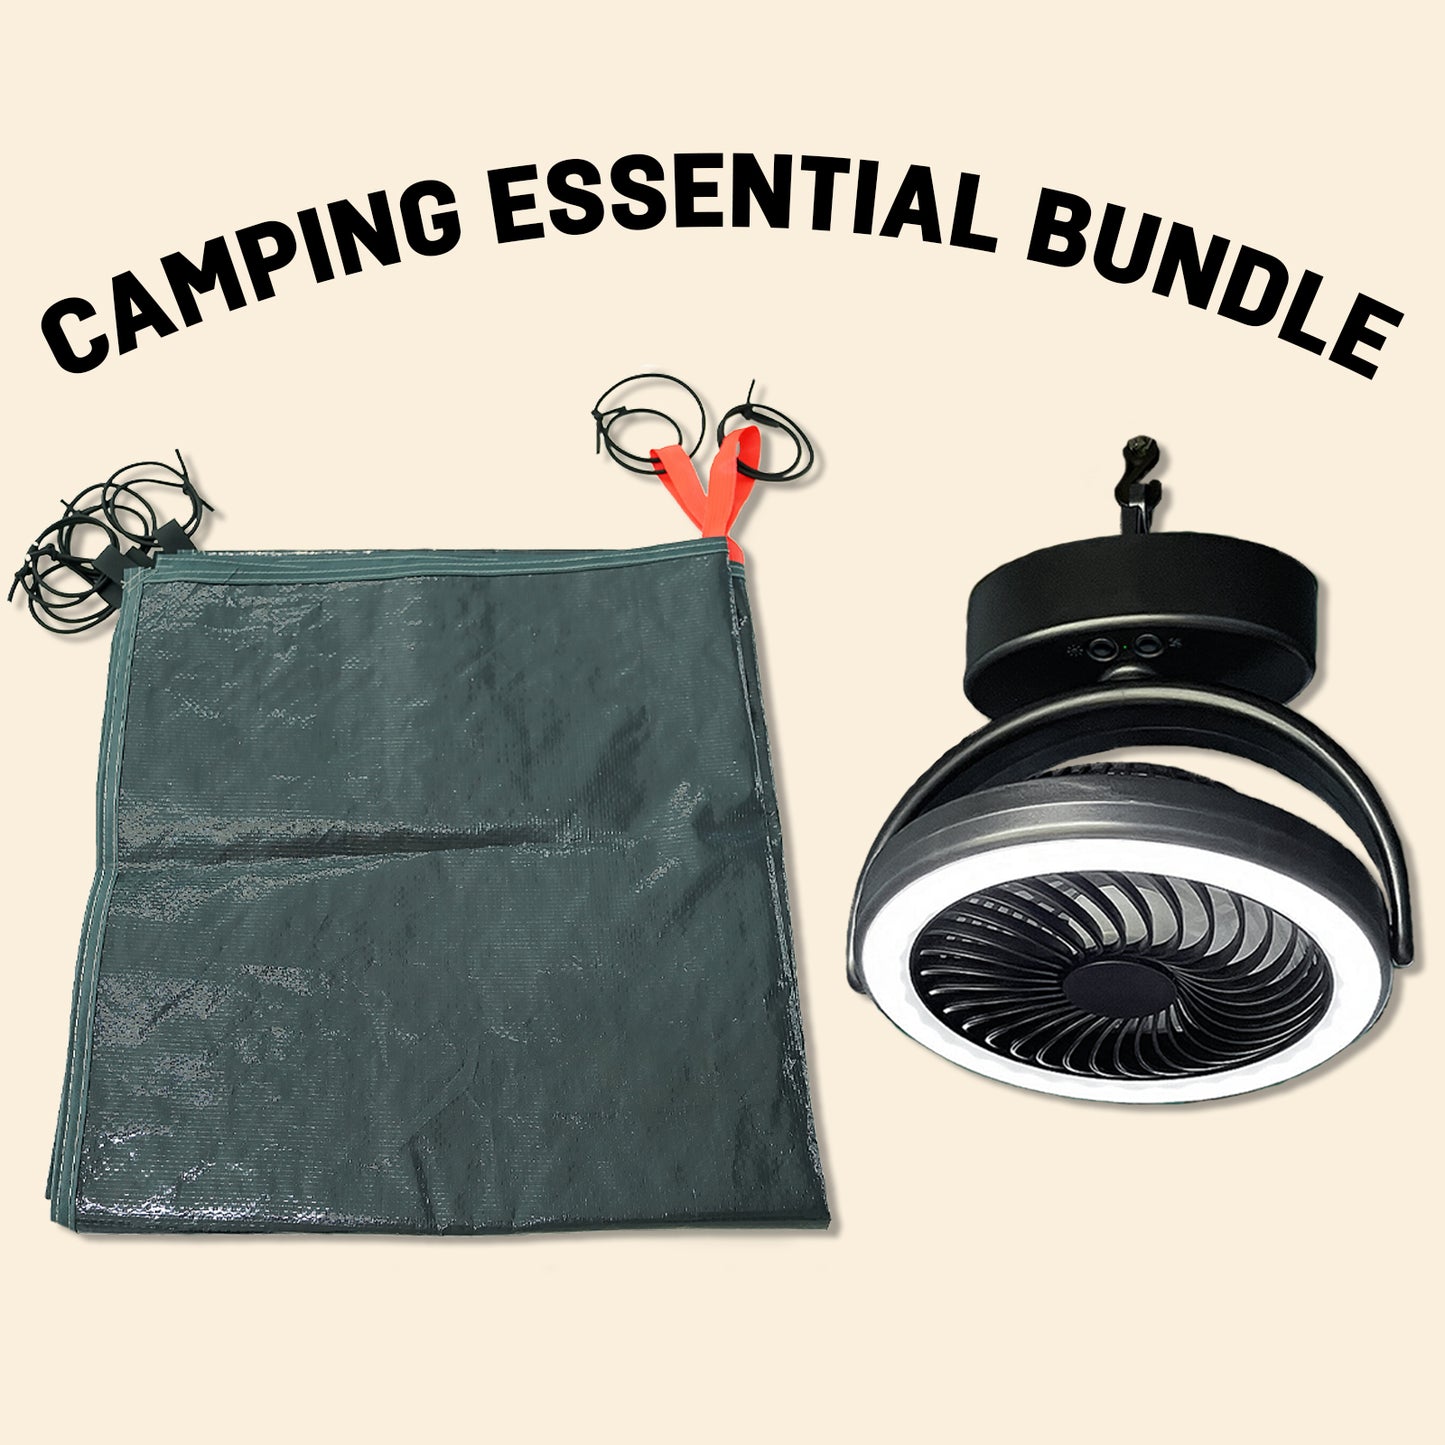 Camping Essentials Bundle